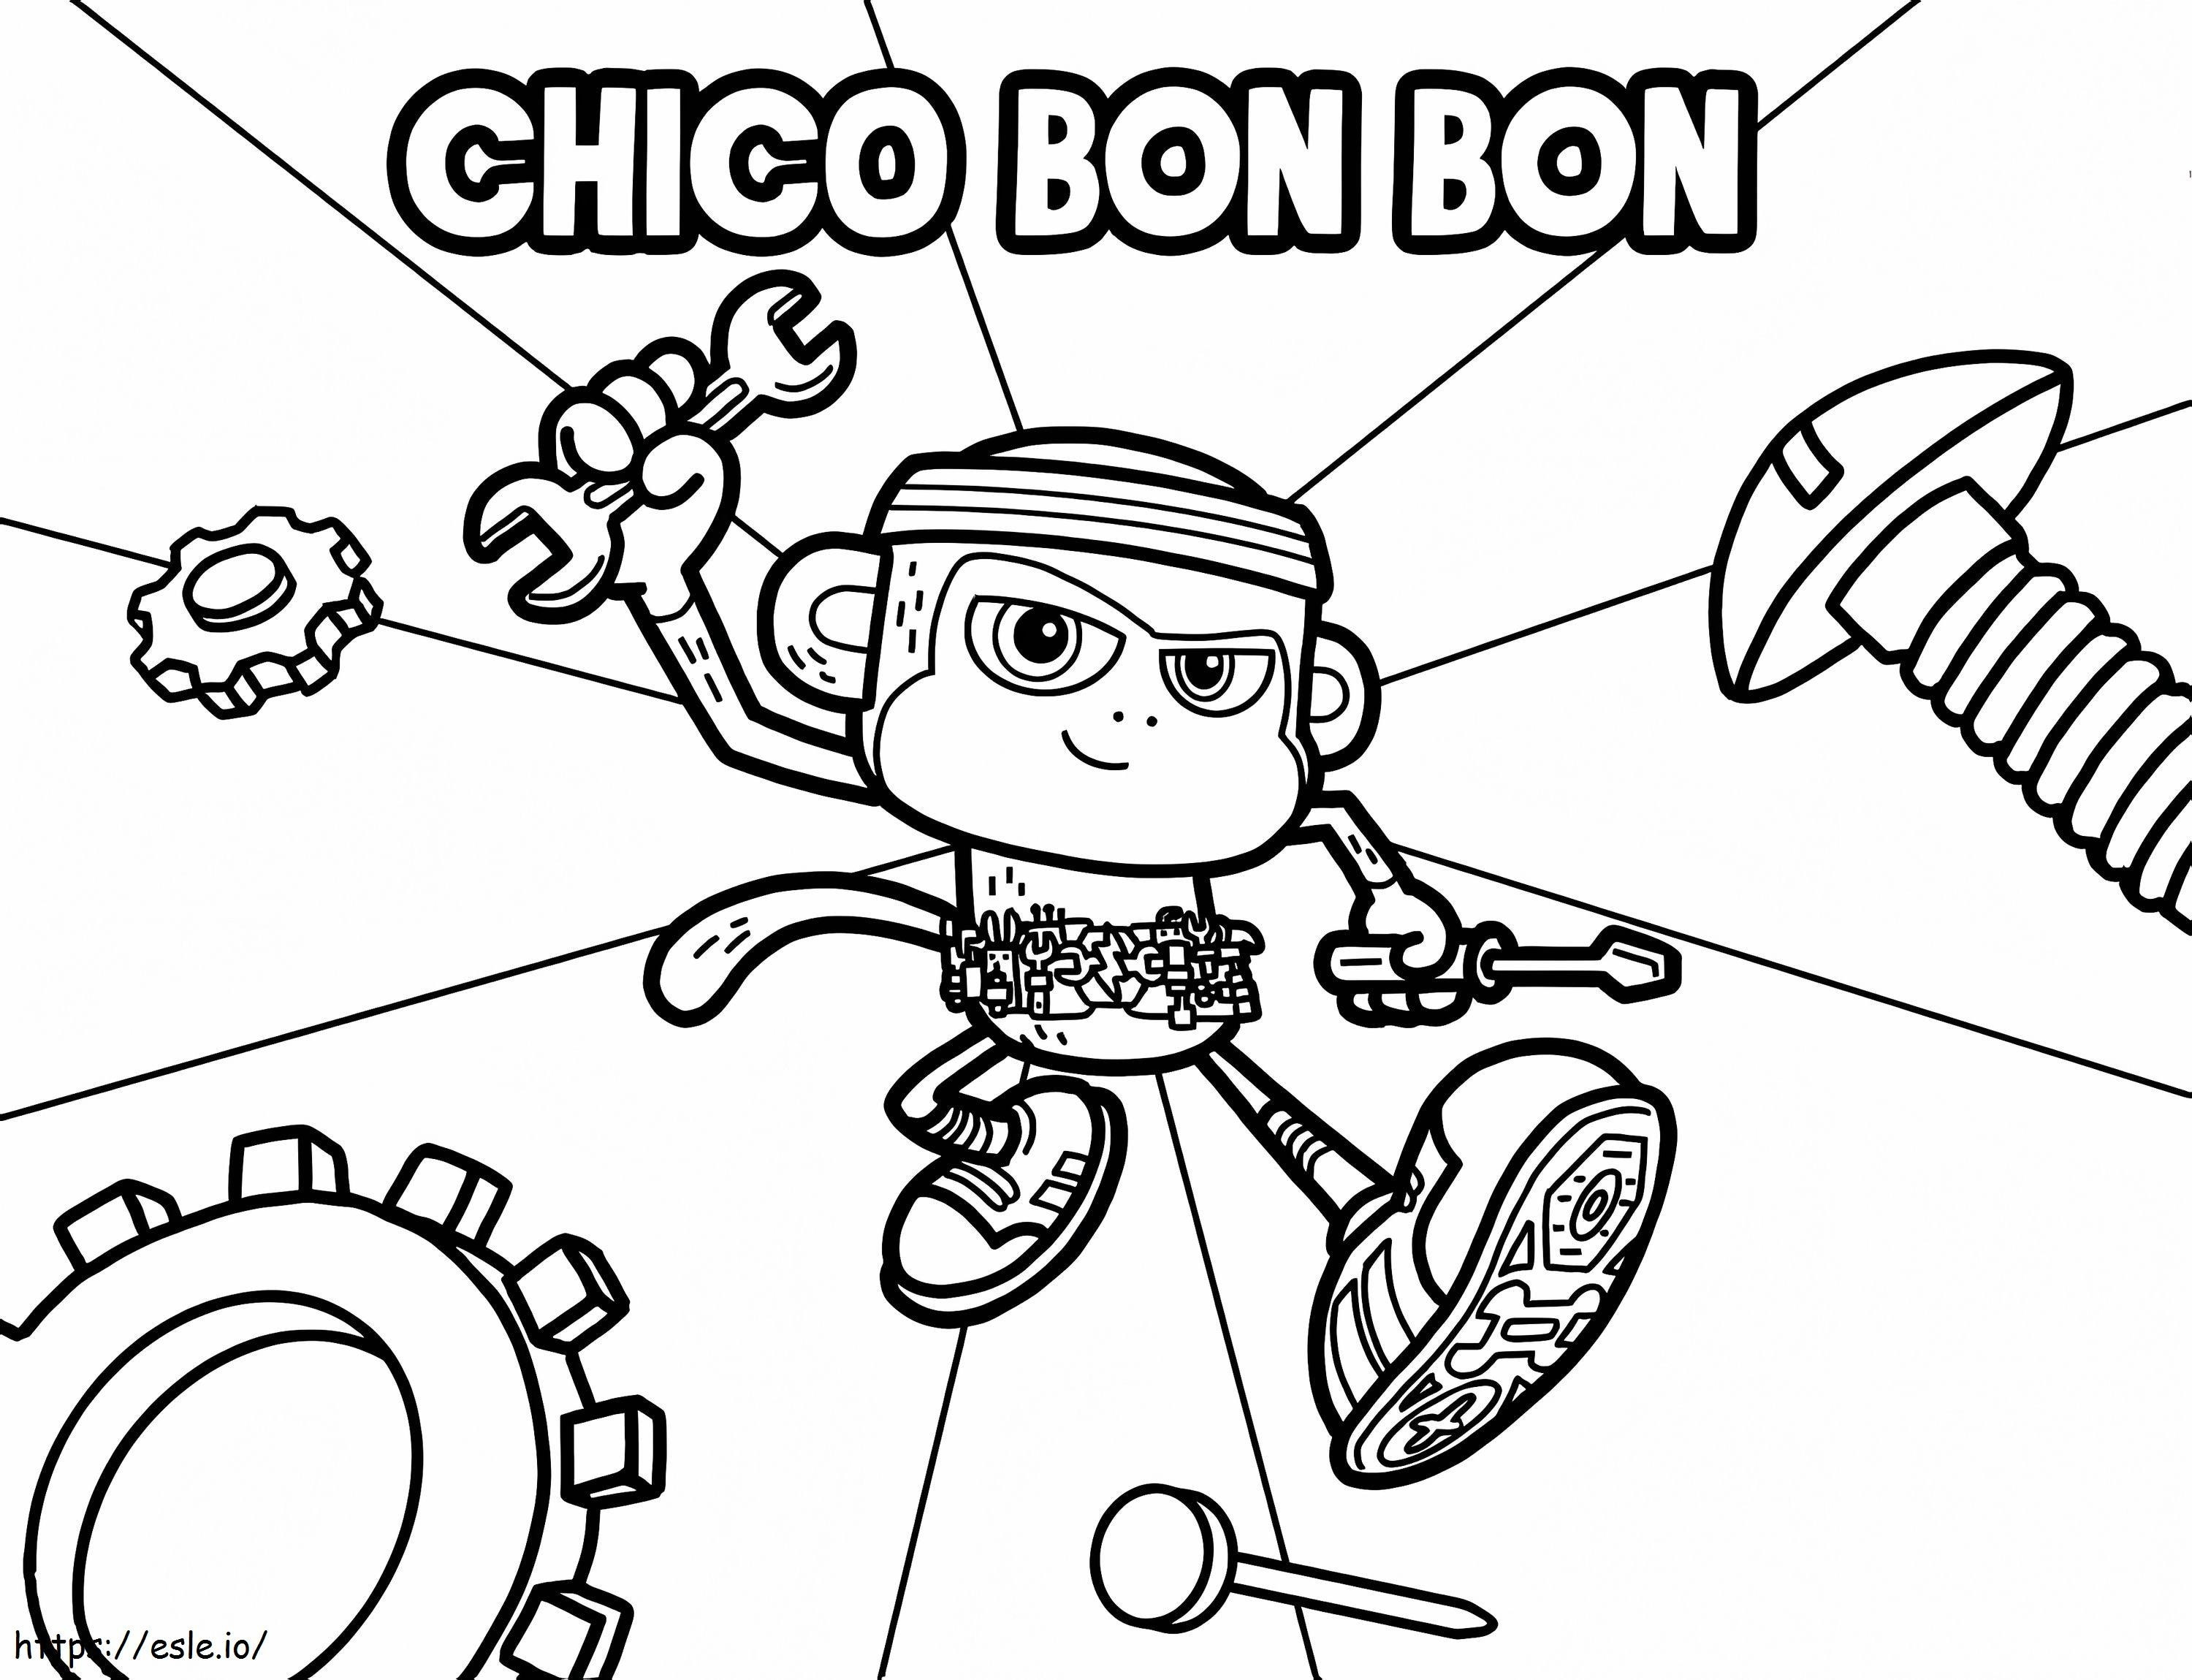 Cooler Chico Bon Bon ausmalbilder